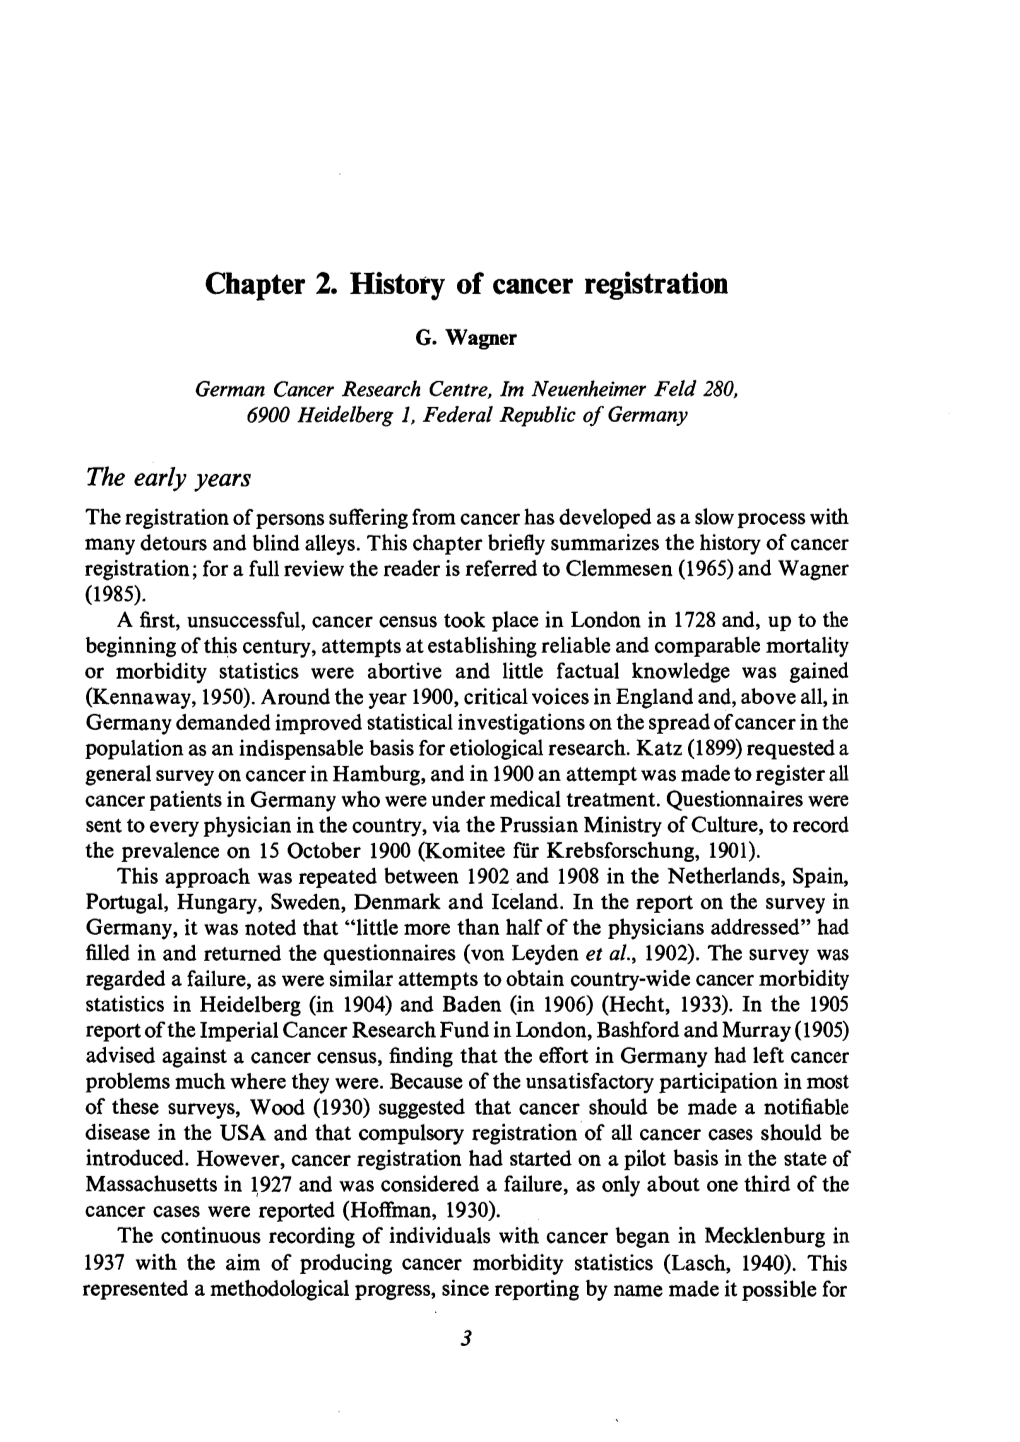 Chapter 2. History of Cancer Registration